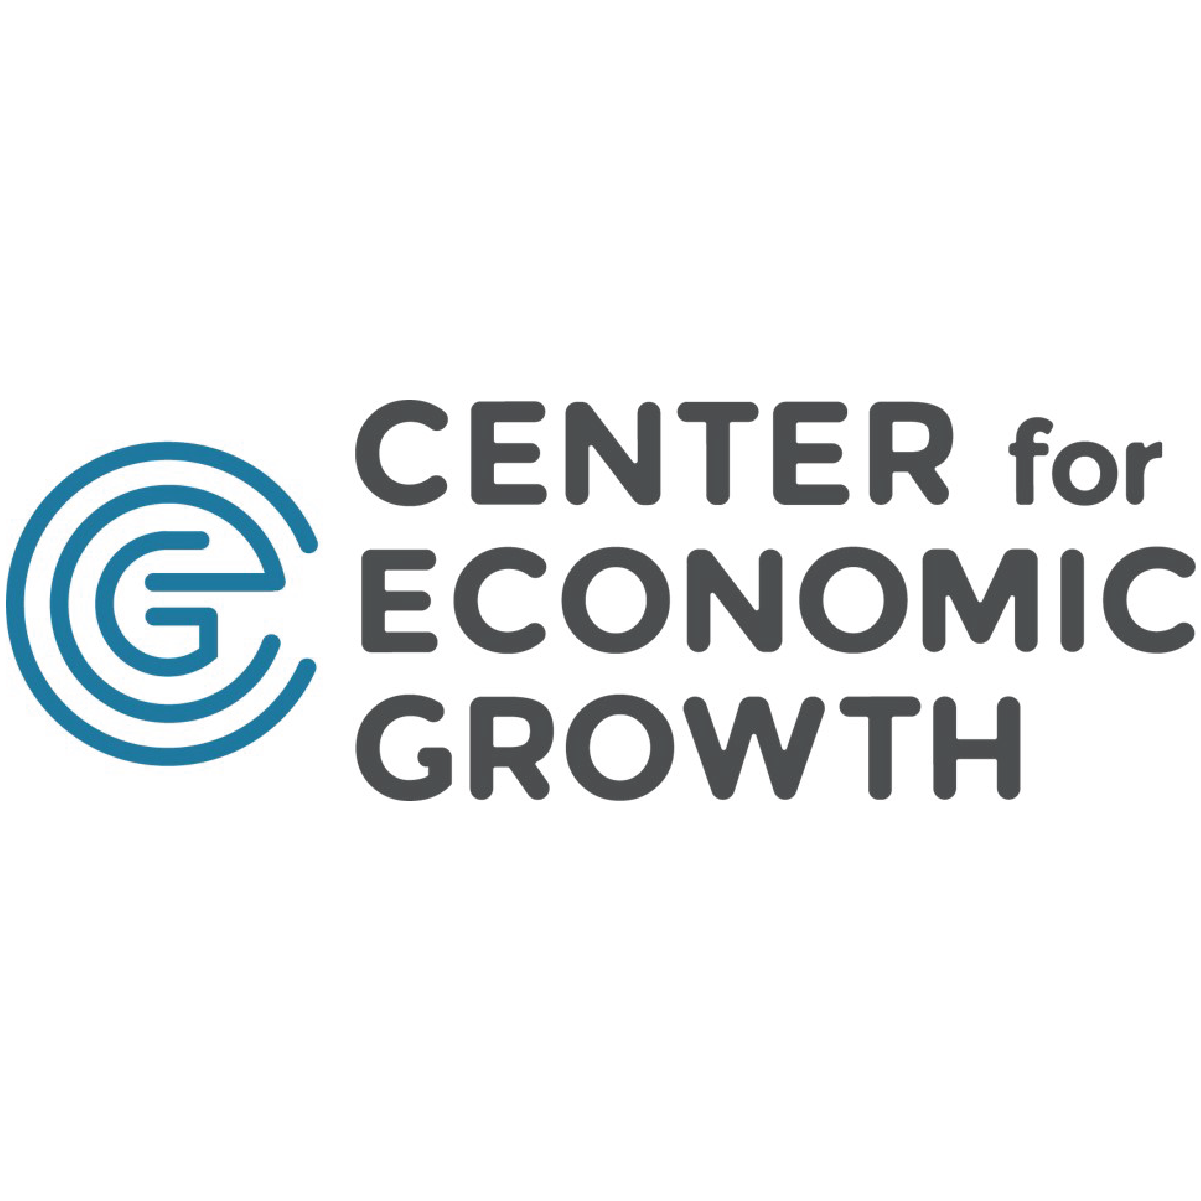 Center for Economic Growth logo